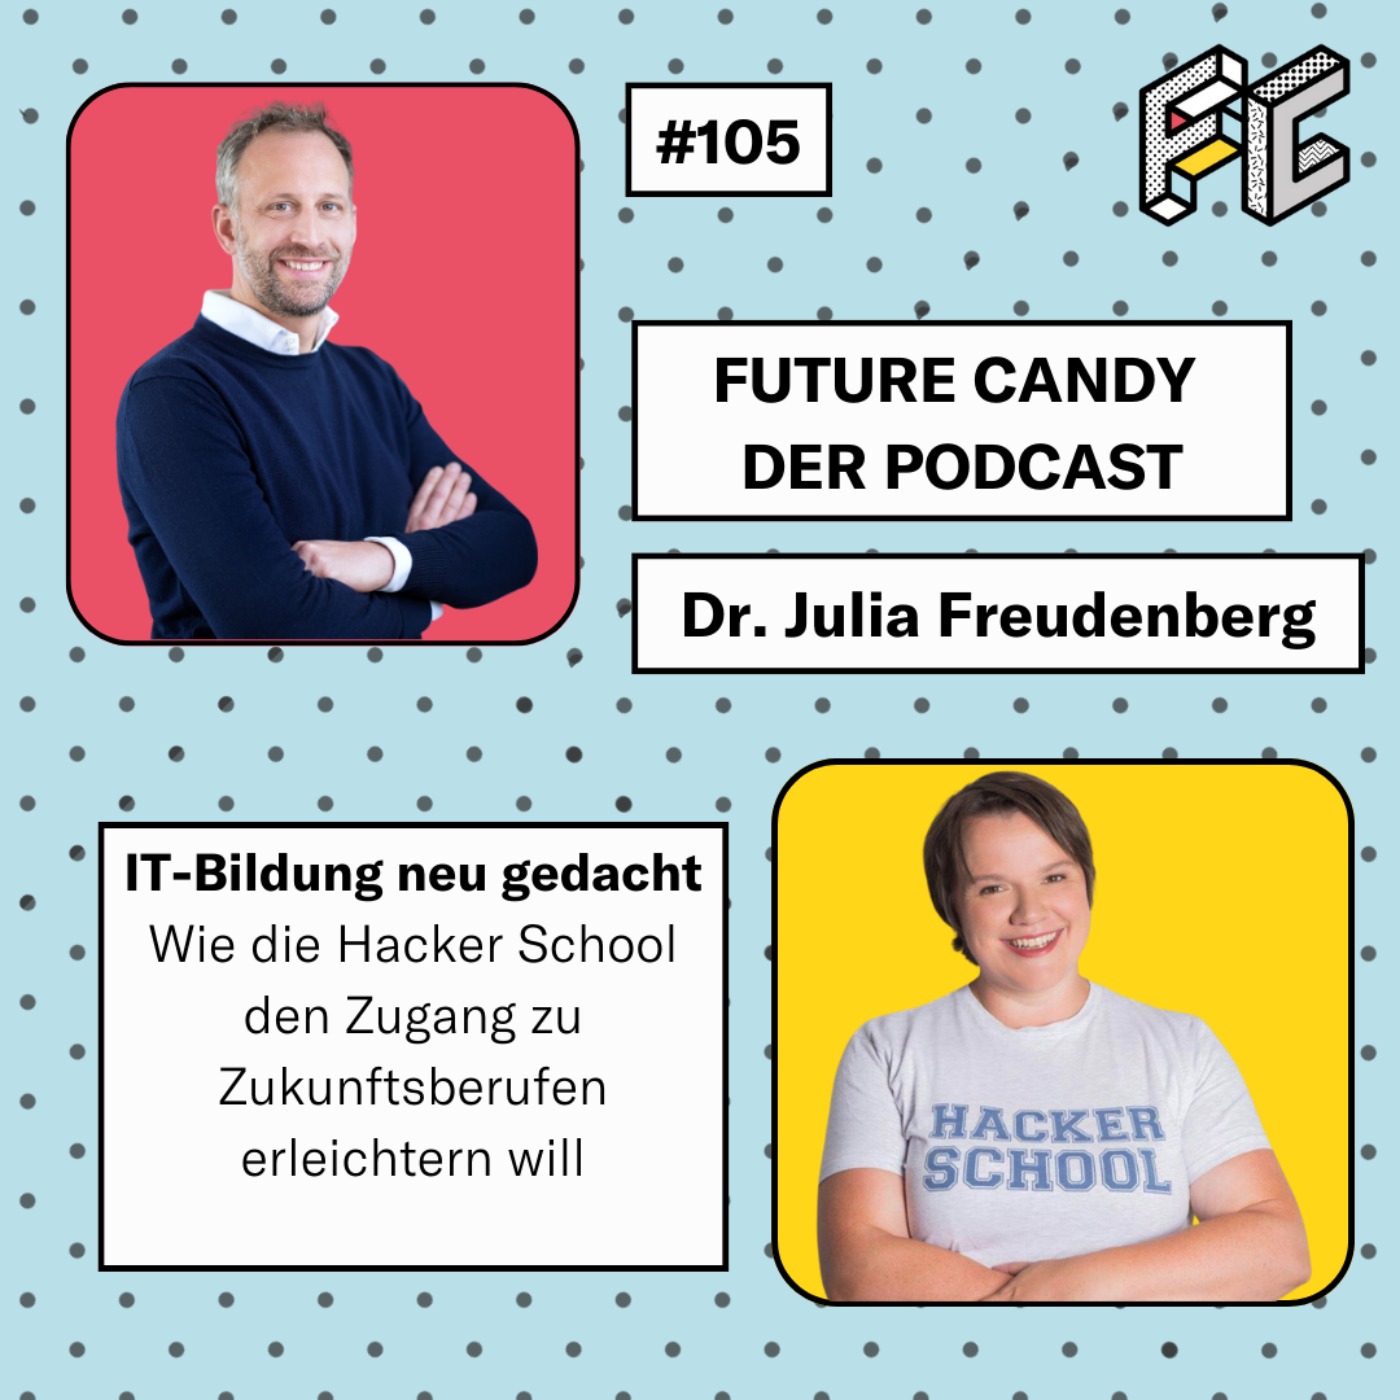 cover art for IT-Bildung neugedacht mit Dr. Julia Freudenberg